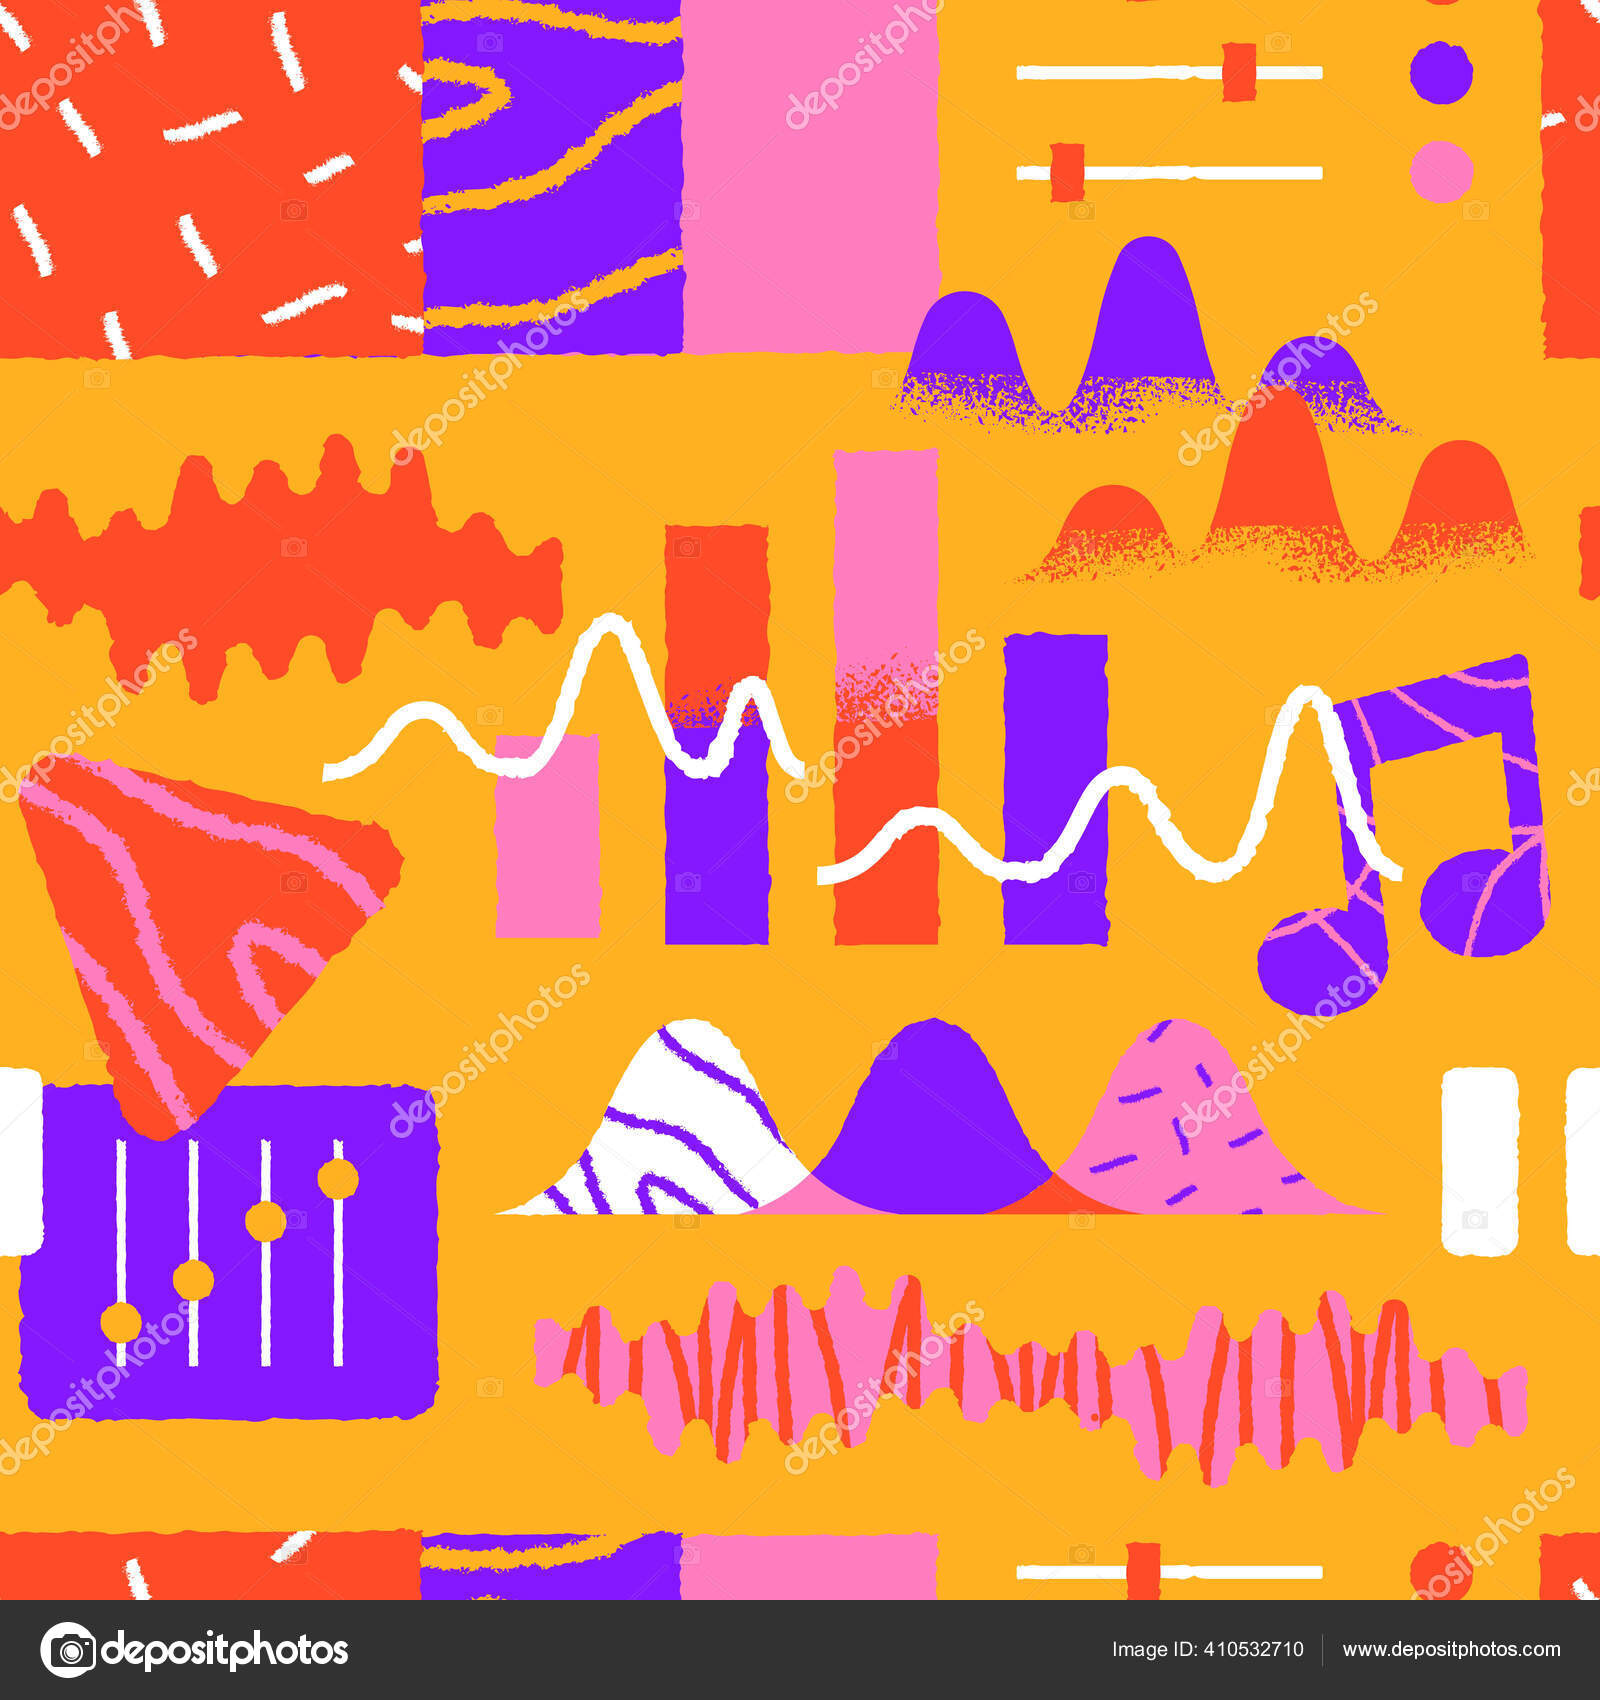 Musik Ikone Nahtlose Musterillustration Trendiger Musik App Symbole Handgezeichneten Retro Vektorgrafik Lizenzfreie Grafiken C Cienpies Depositphotos